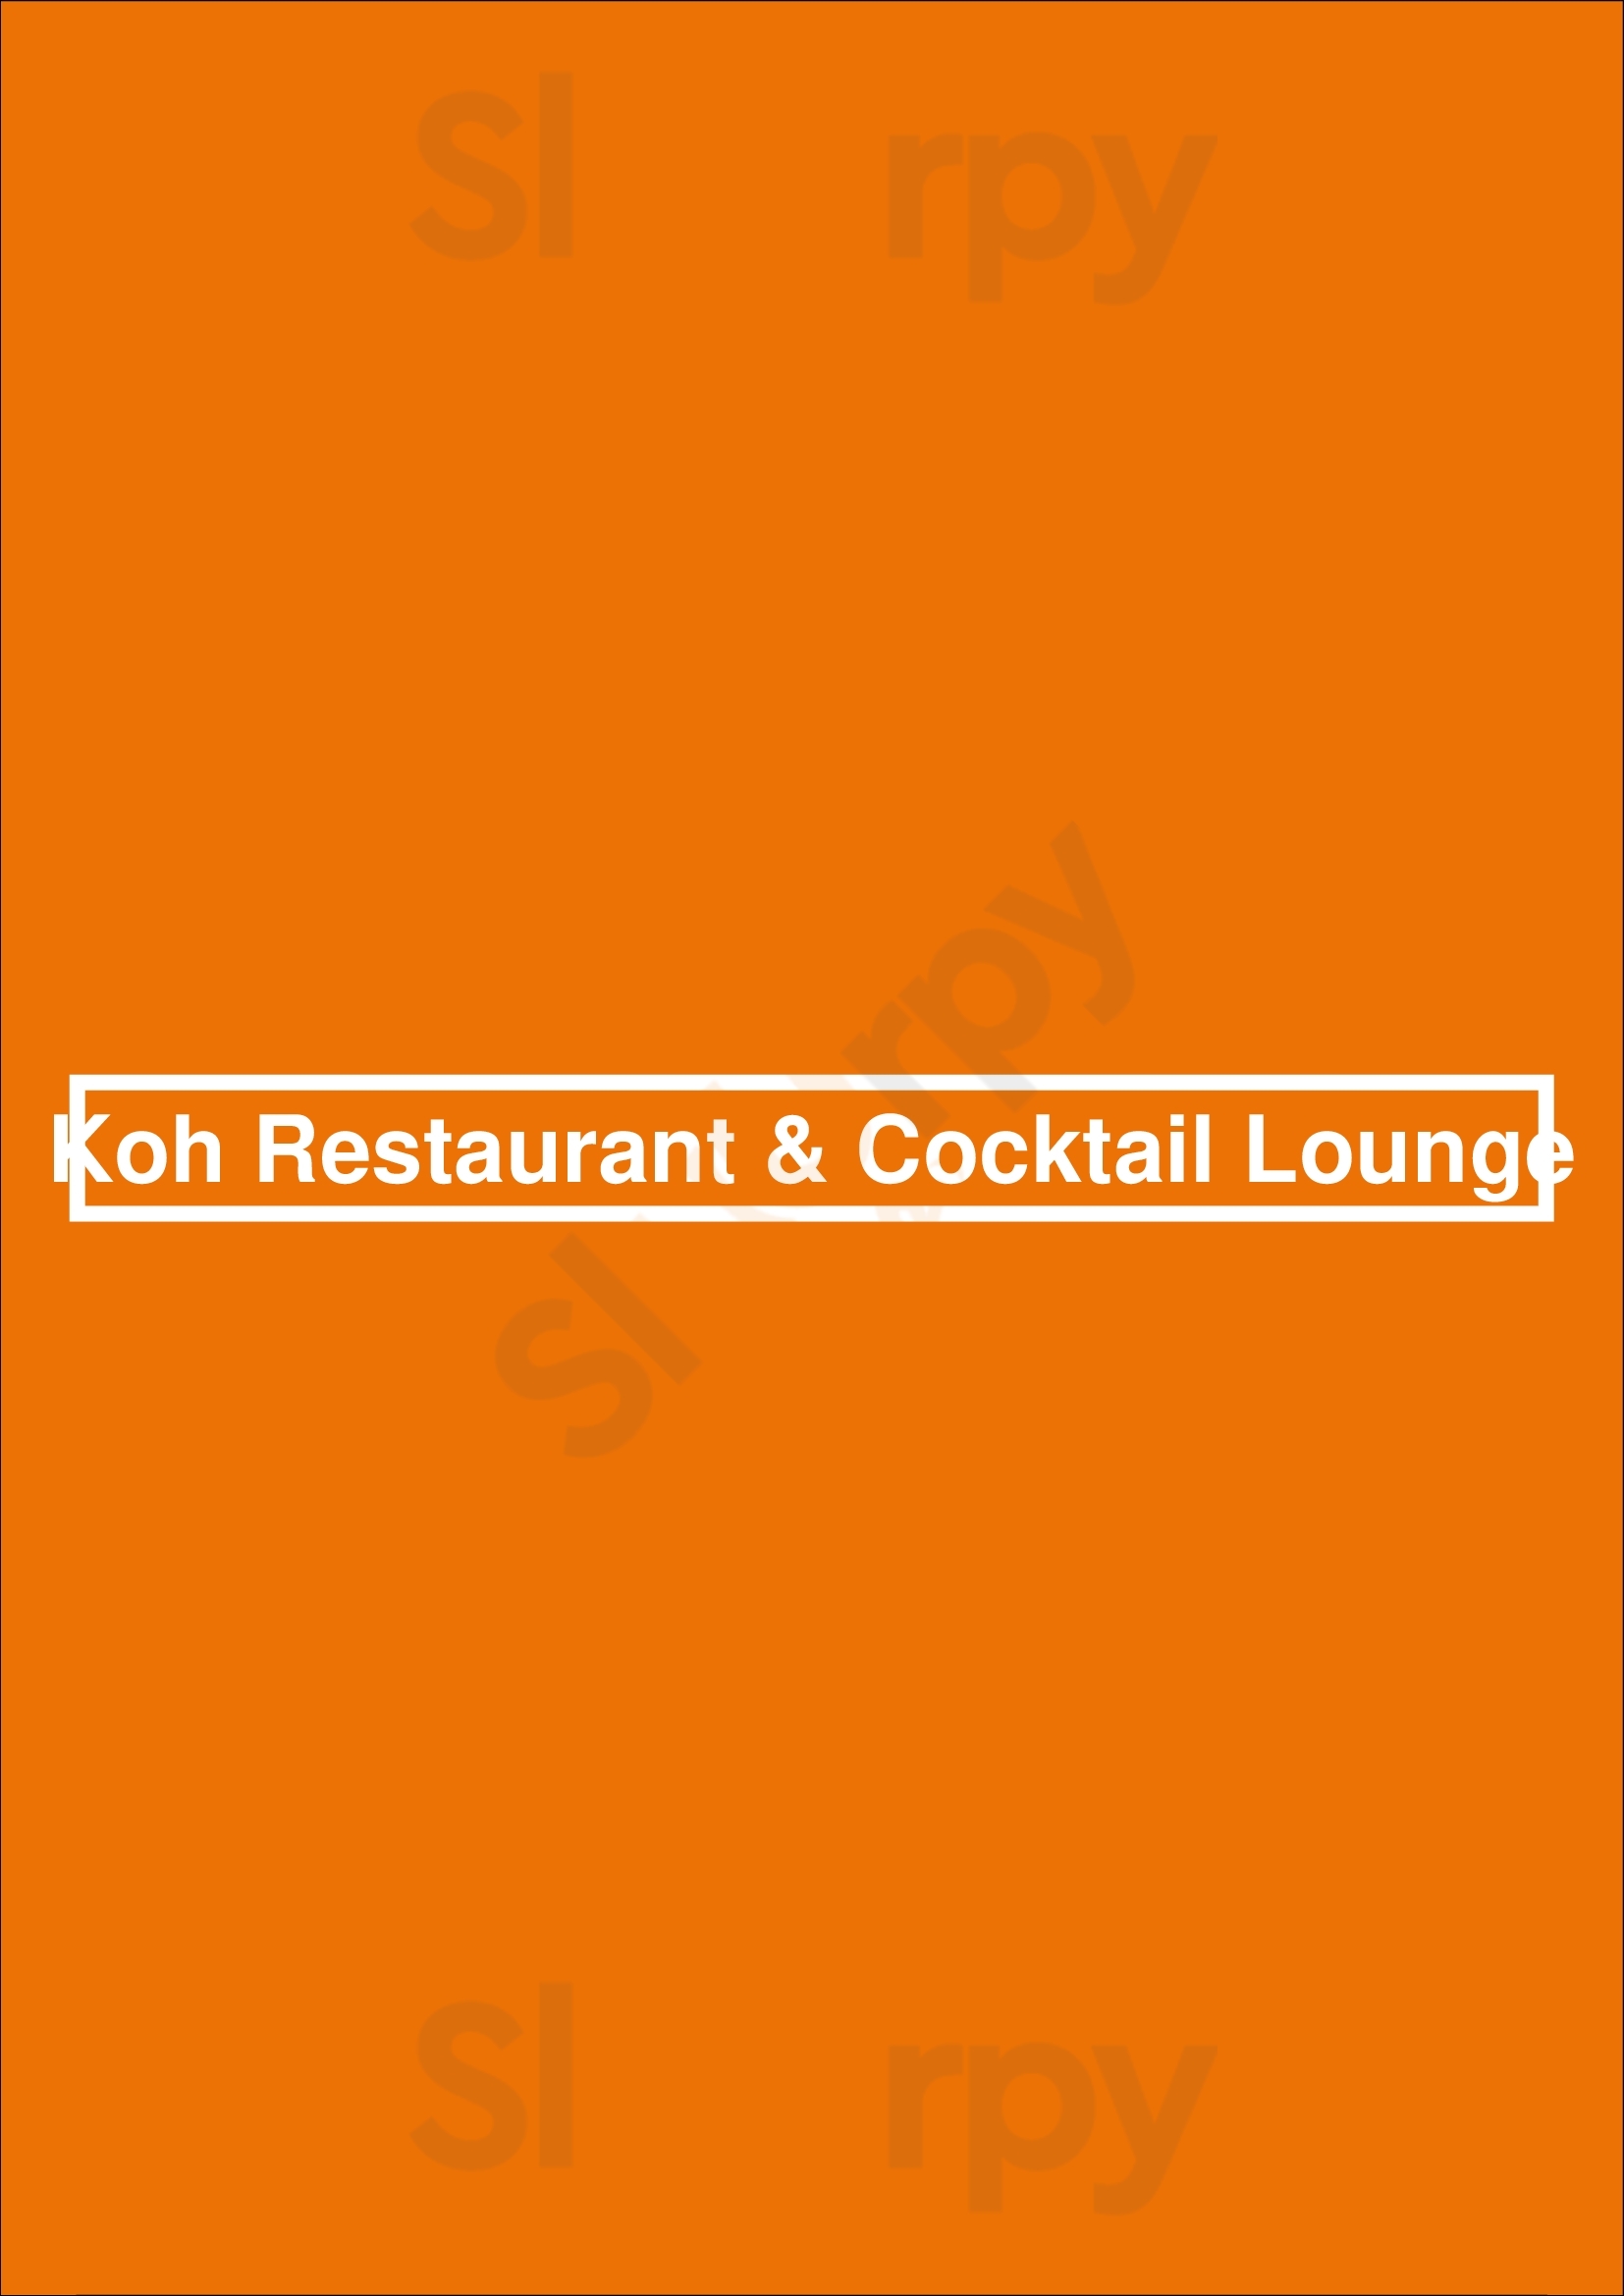 Koh Restaurant & Cocktail Lounge Dublin Menu - 1